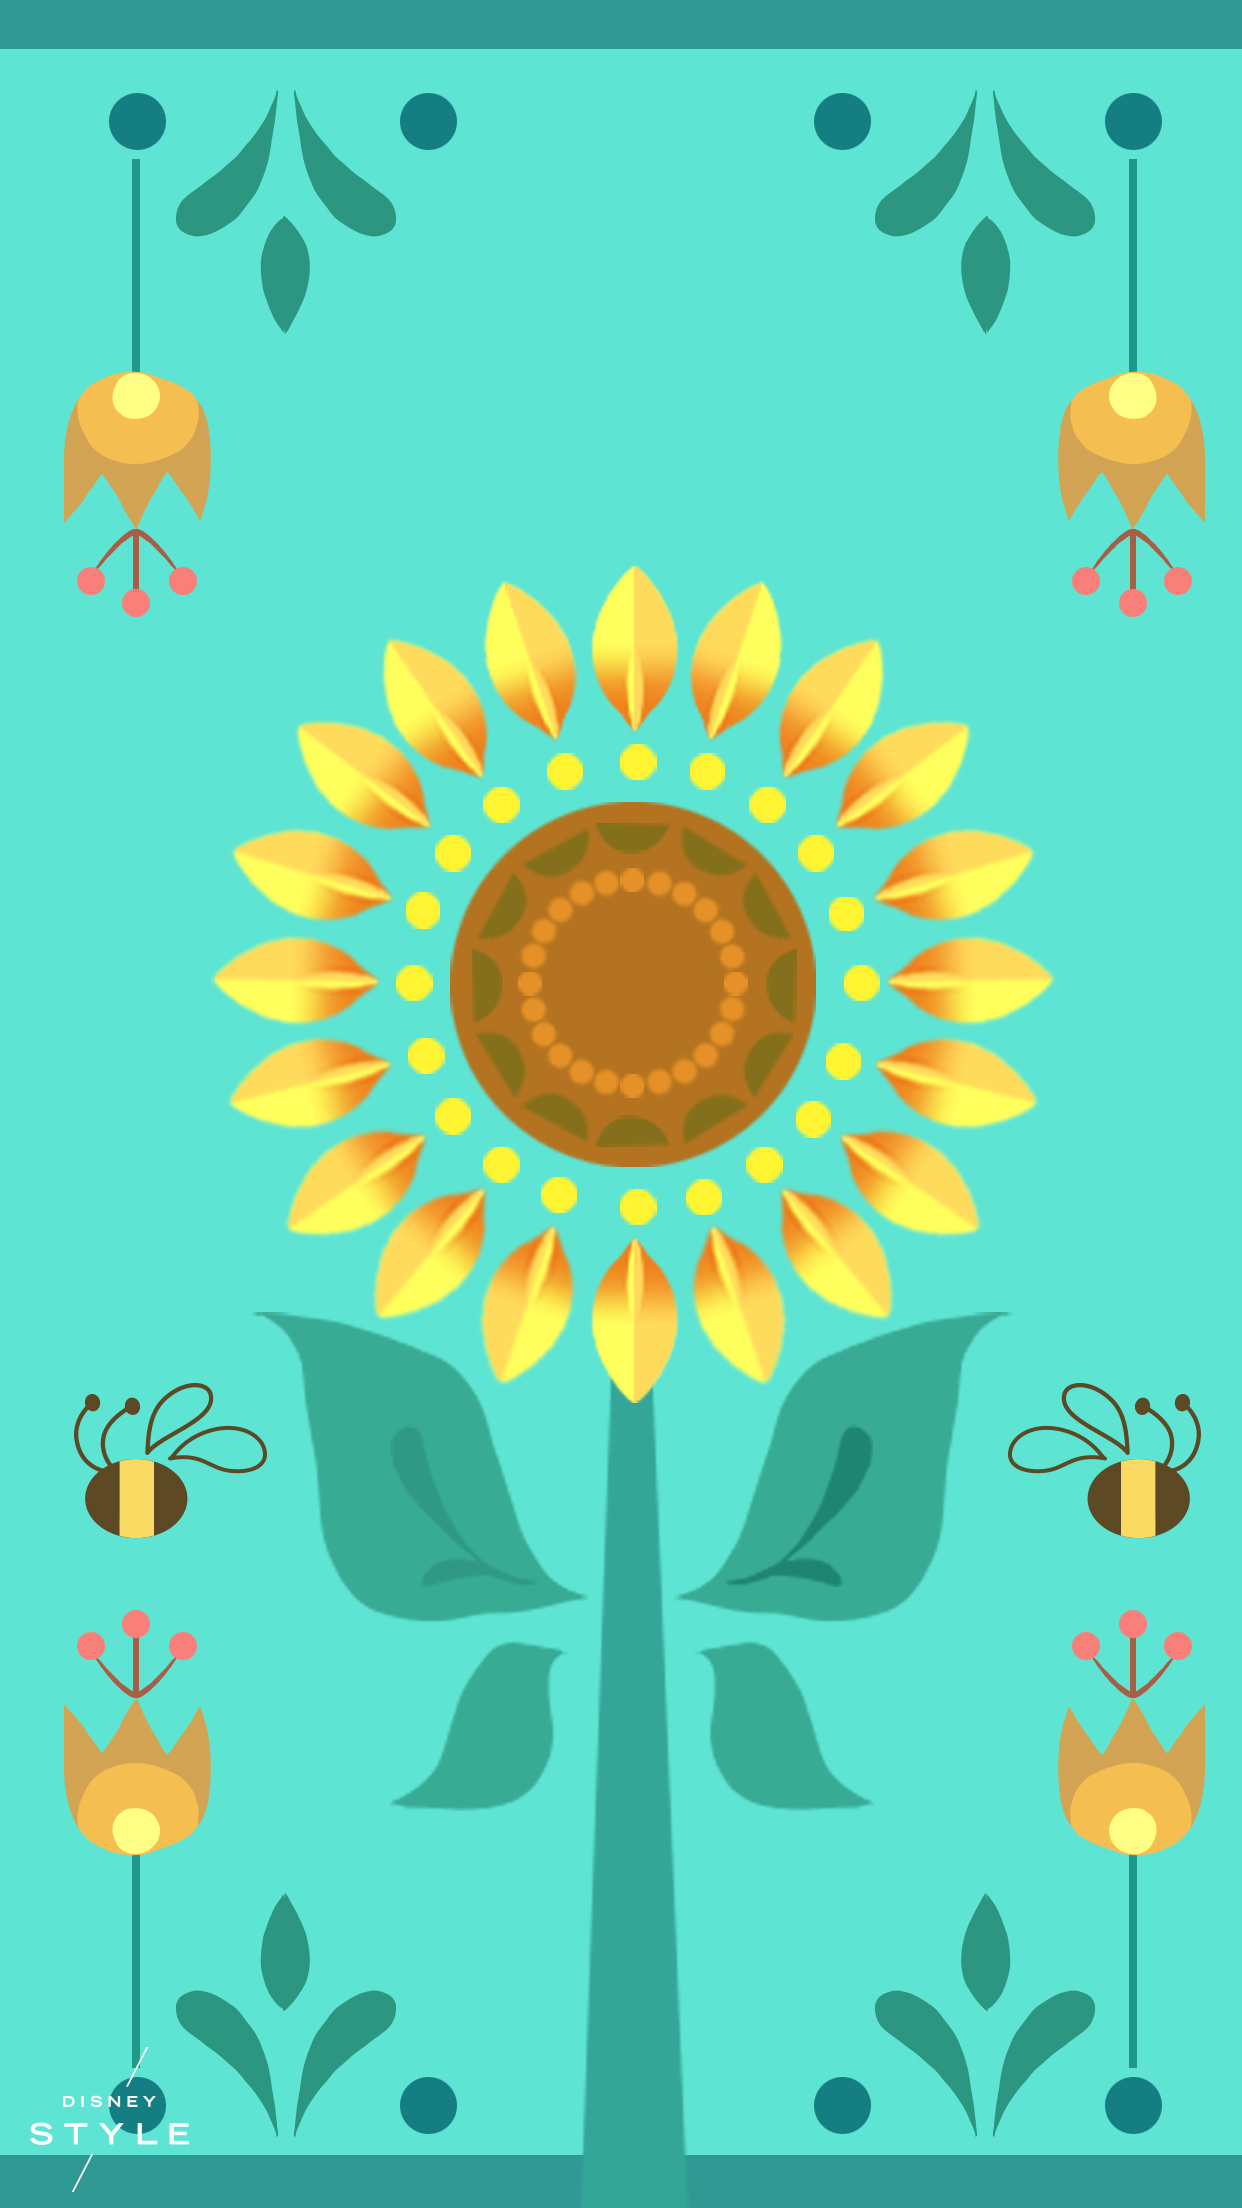 carta da parati stile disney,girasole,giallo,girasole,turchese,fiore